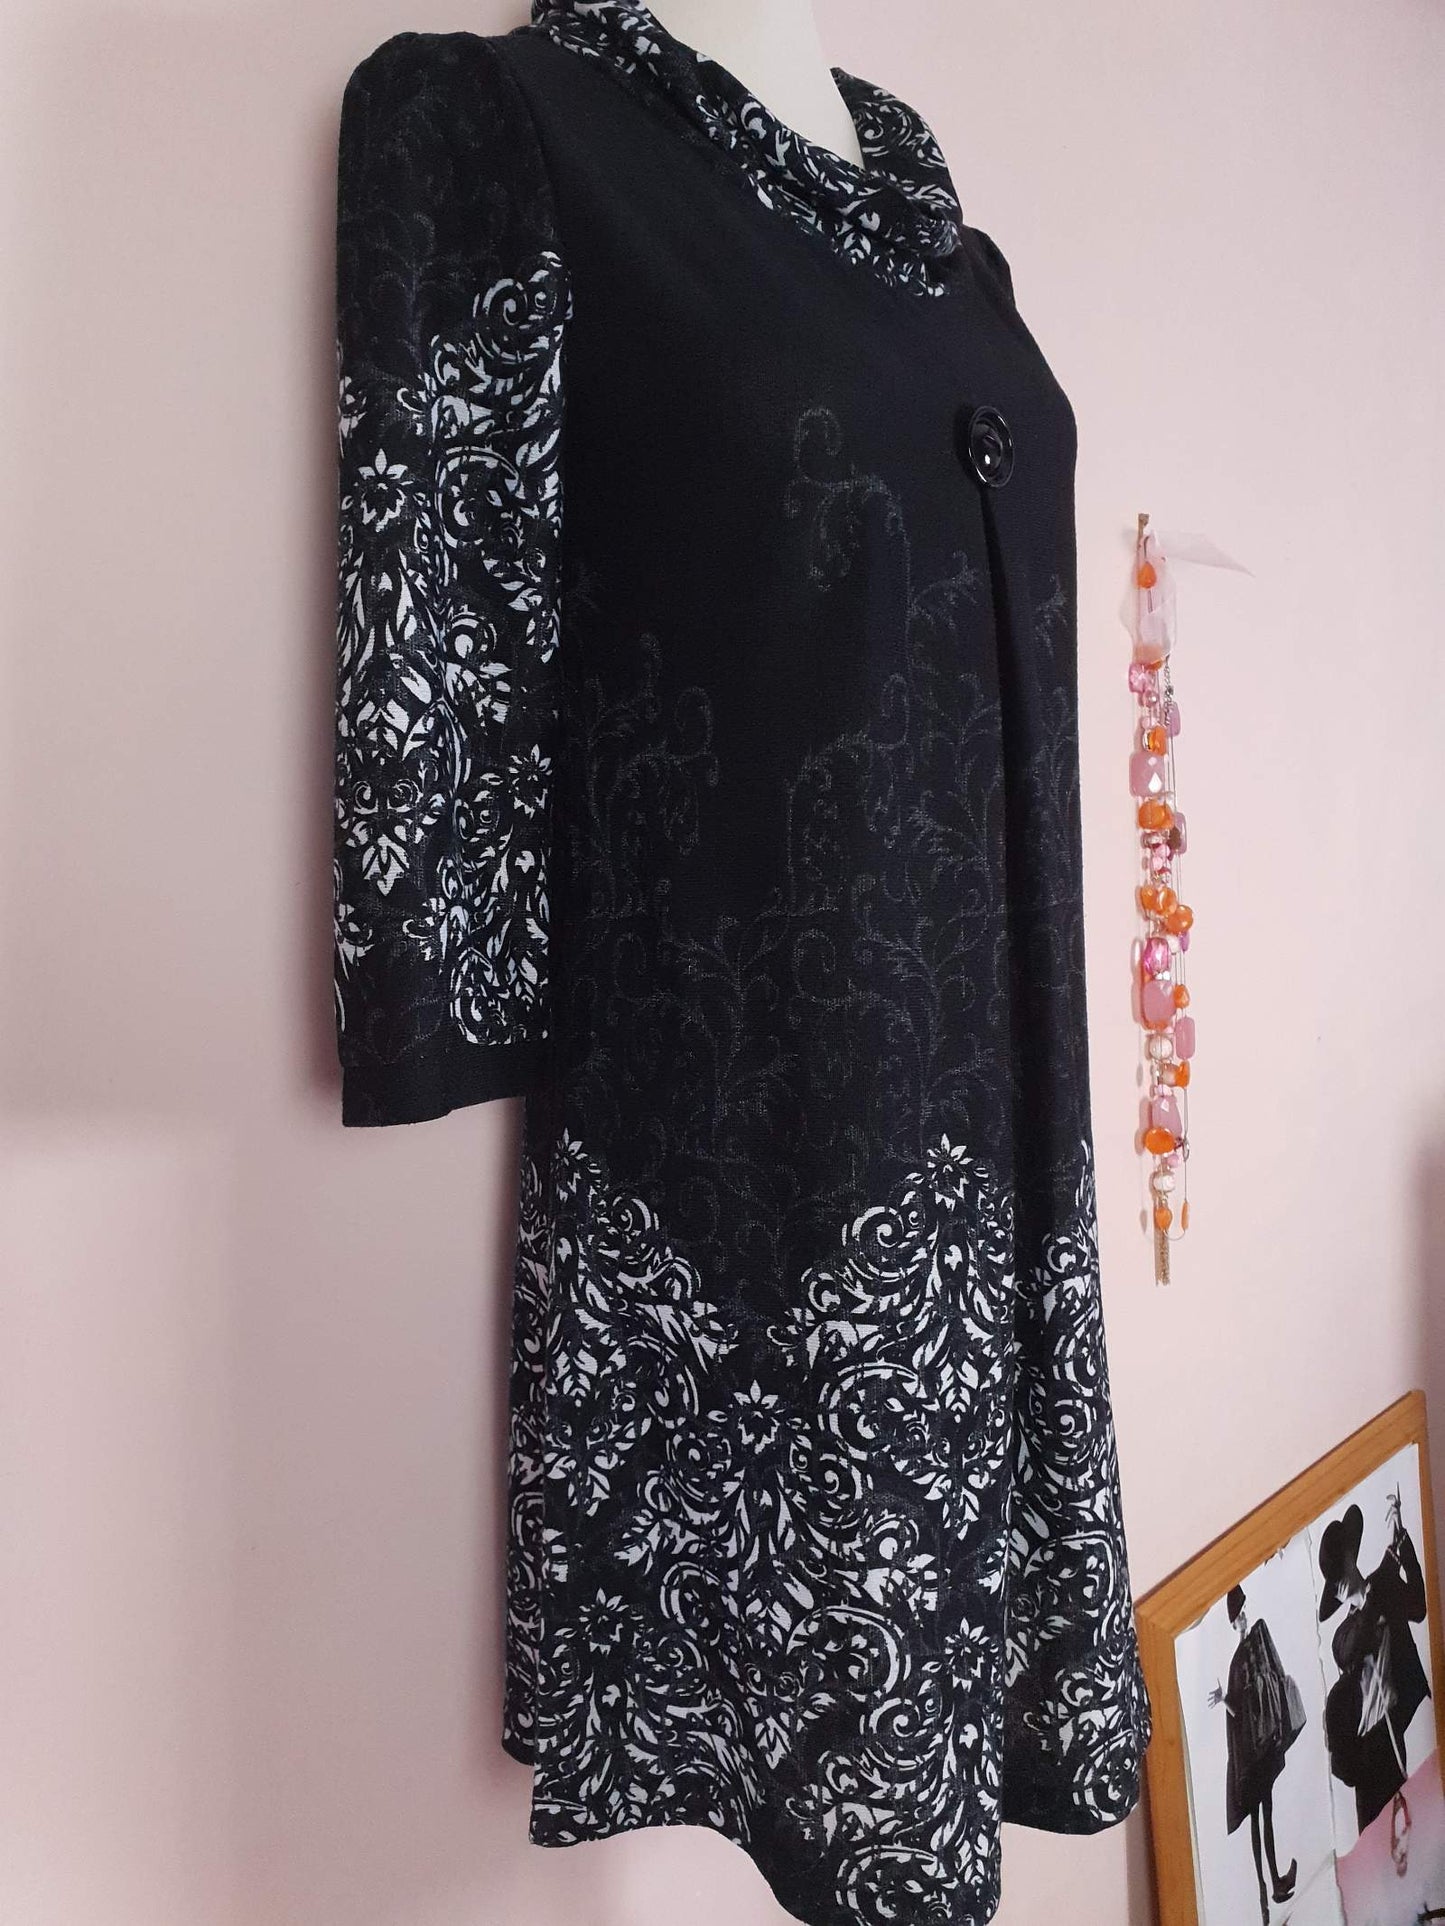 Pre-Owned Black & White Dress Scroll Print Size 12/14 Monochrome